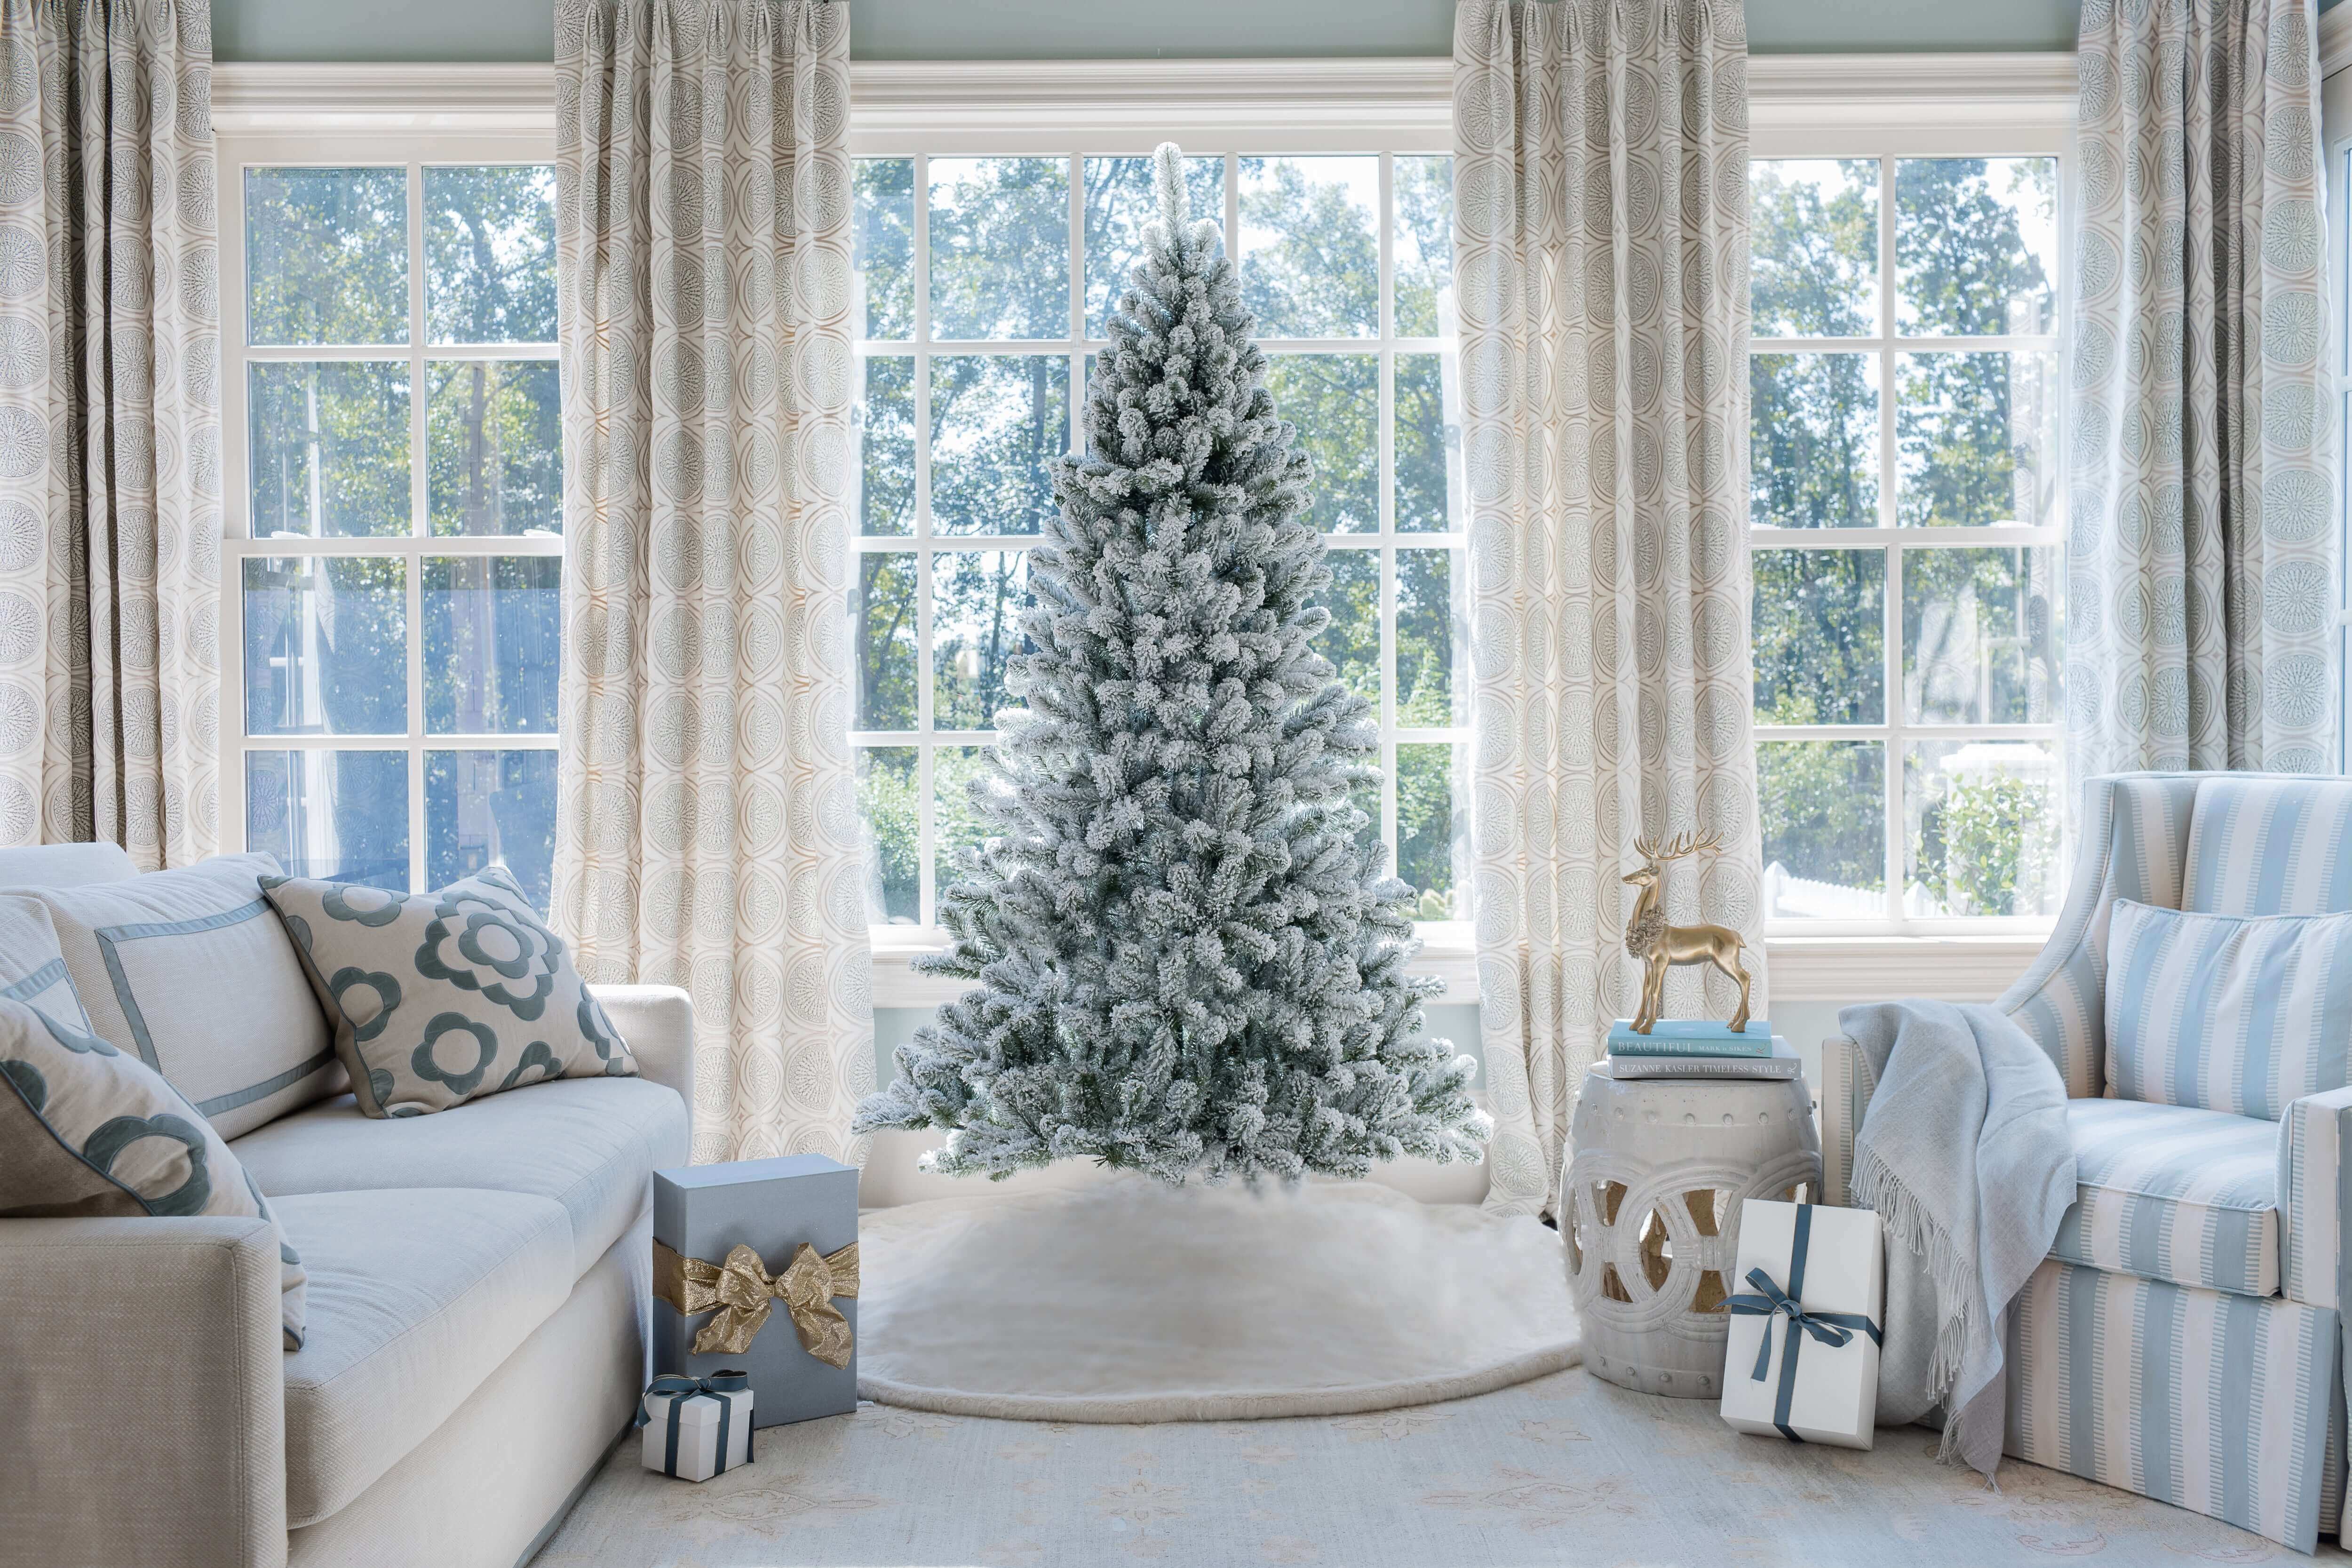 King of Christmas 10' Prince Flock® Artificial Christmas Tree with 750 Warm White LED Lights